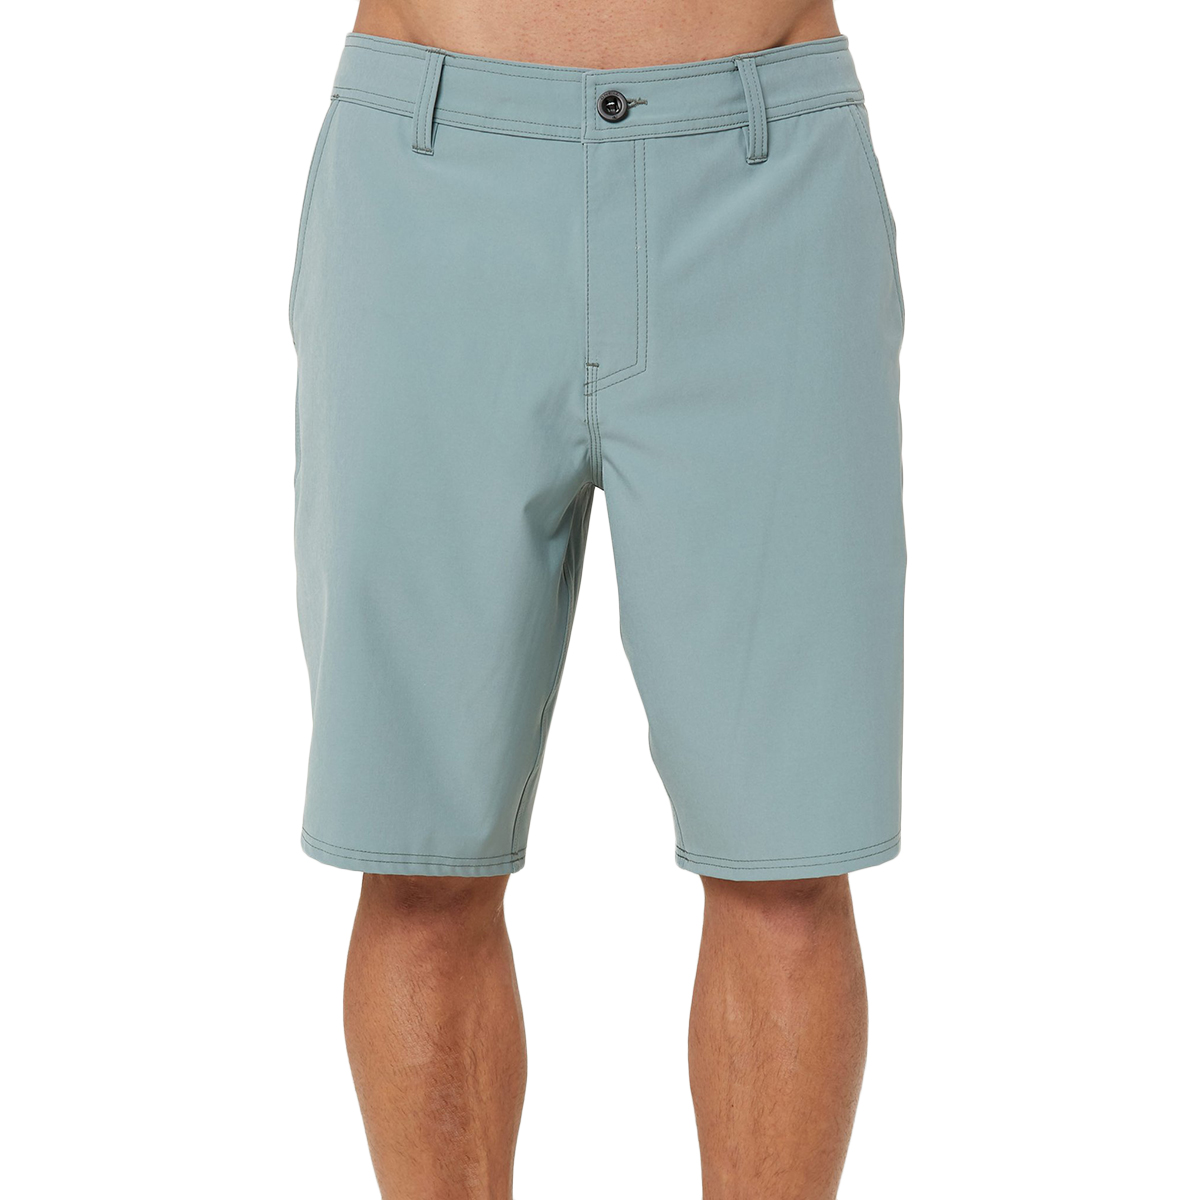 O'neill Men's Loaded Reserve Hybrid Shorts - Blue, 34